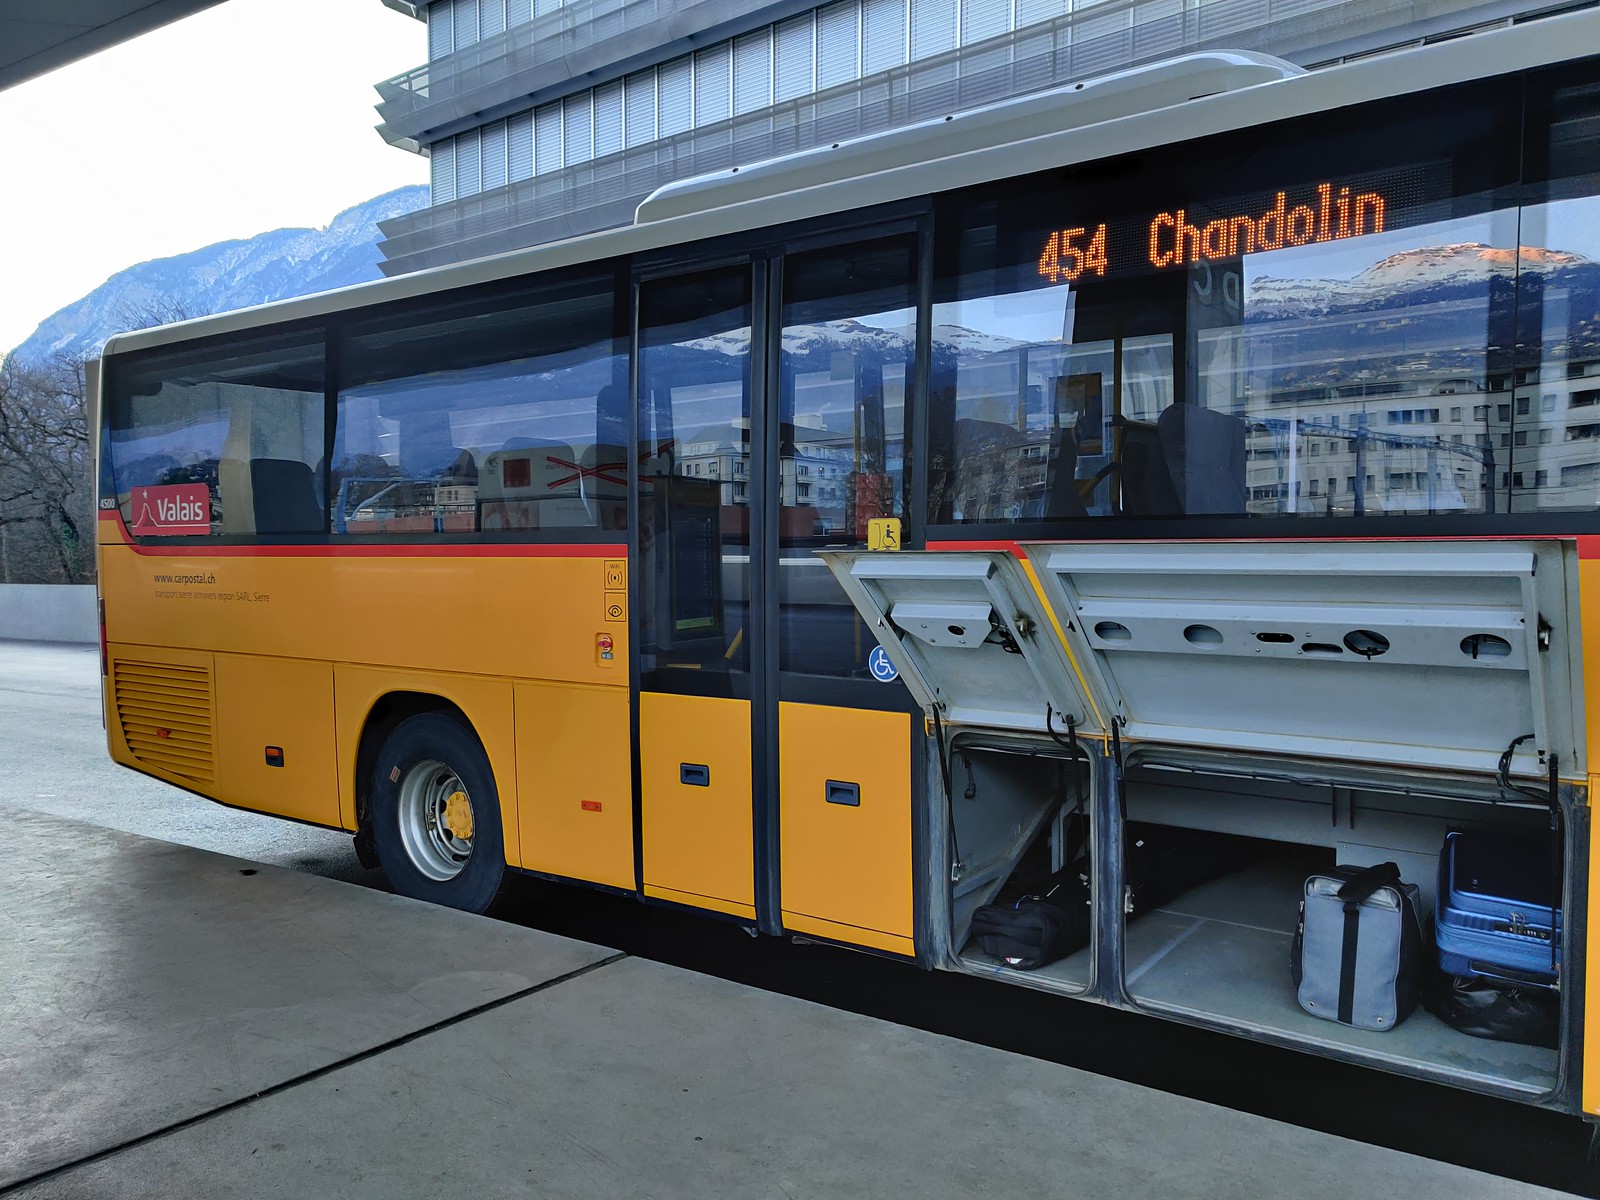 Bus to Chandolin